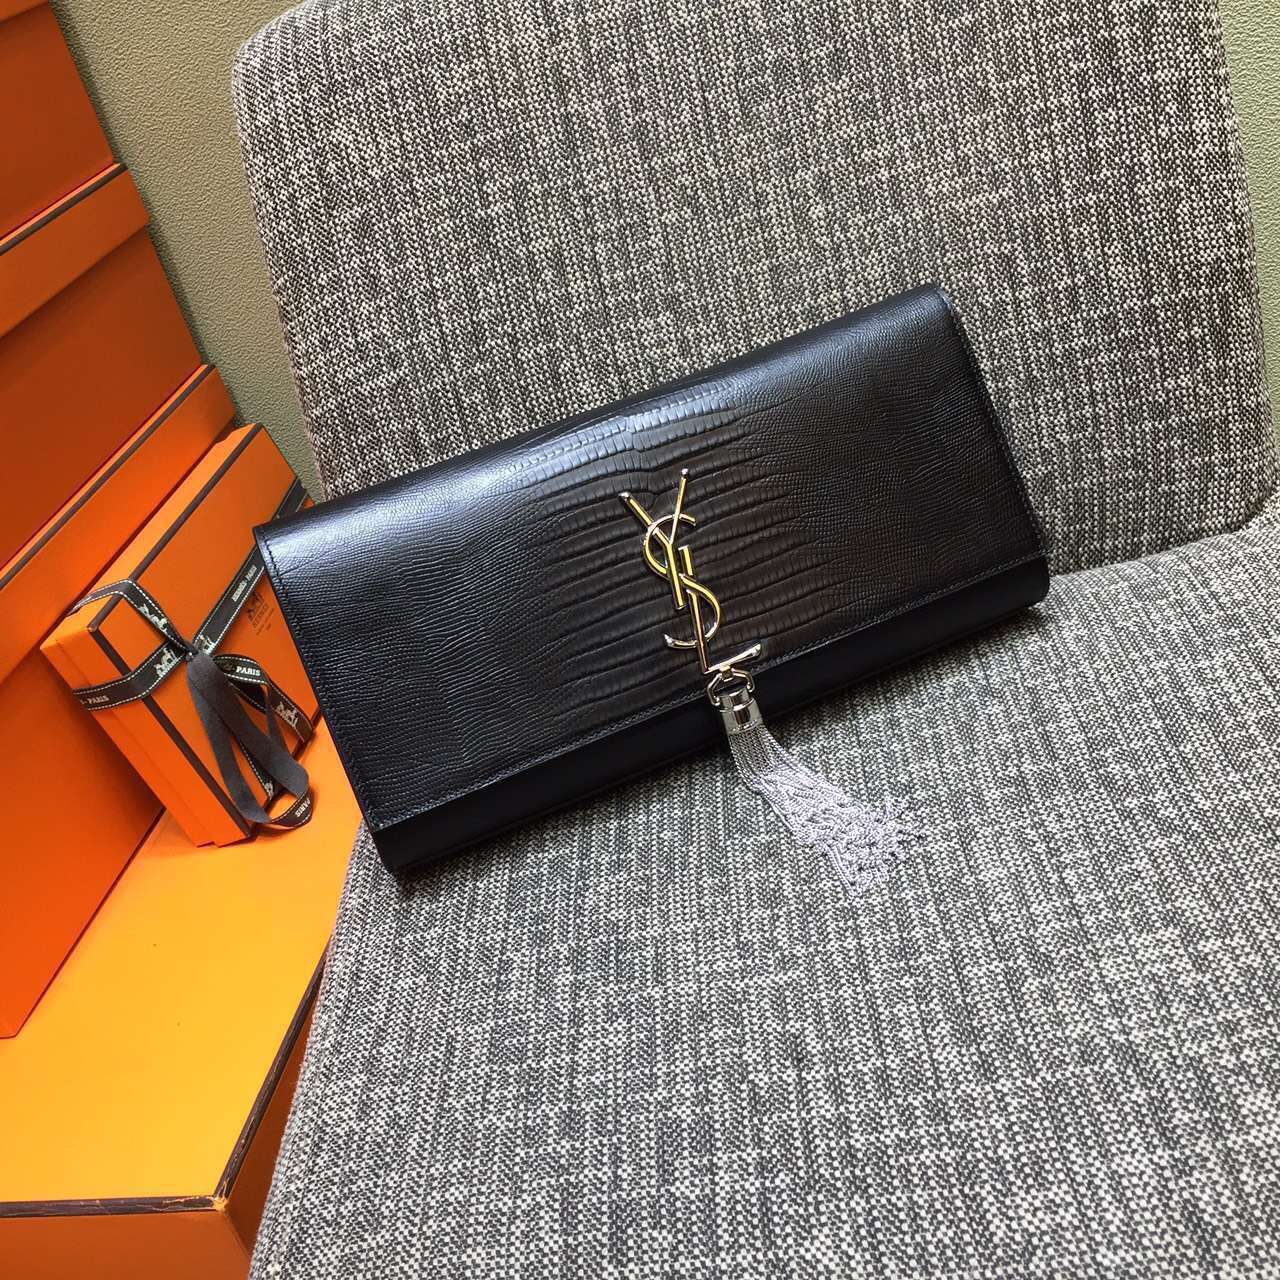 2015 New YSL Bag Cheap Sale-Saint Laurent Classic Monogram Tassel Clutch in Black Lizard Embossed Leather